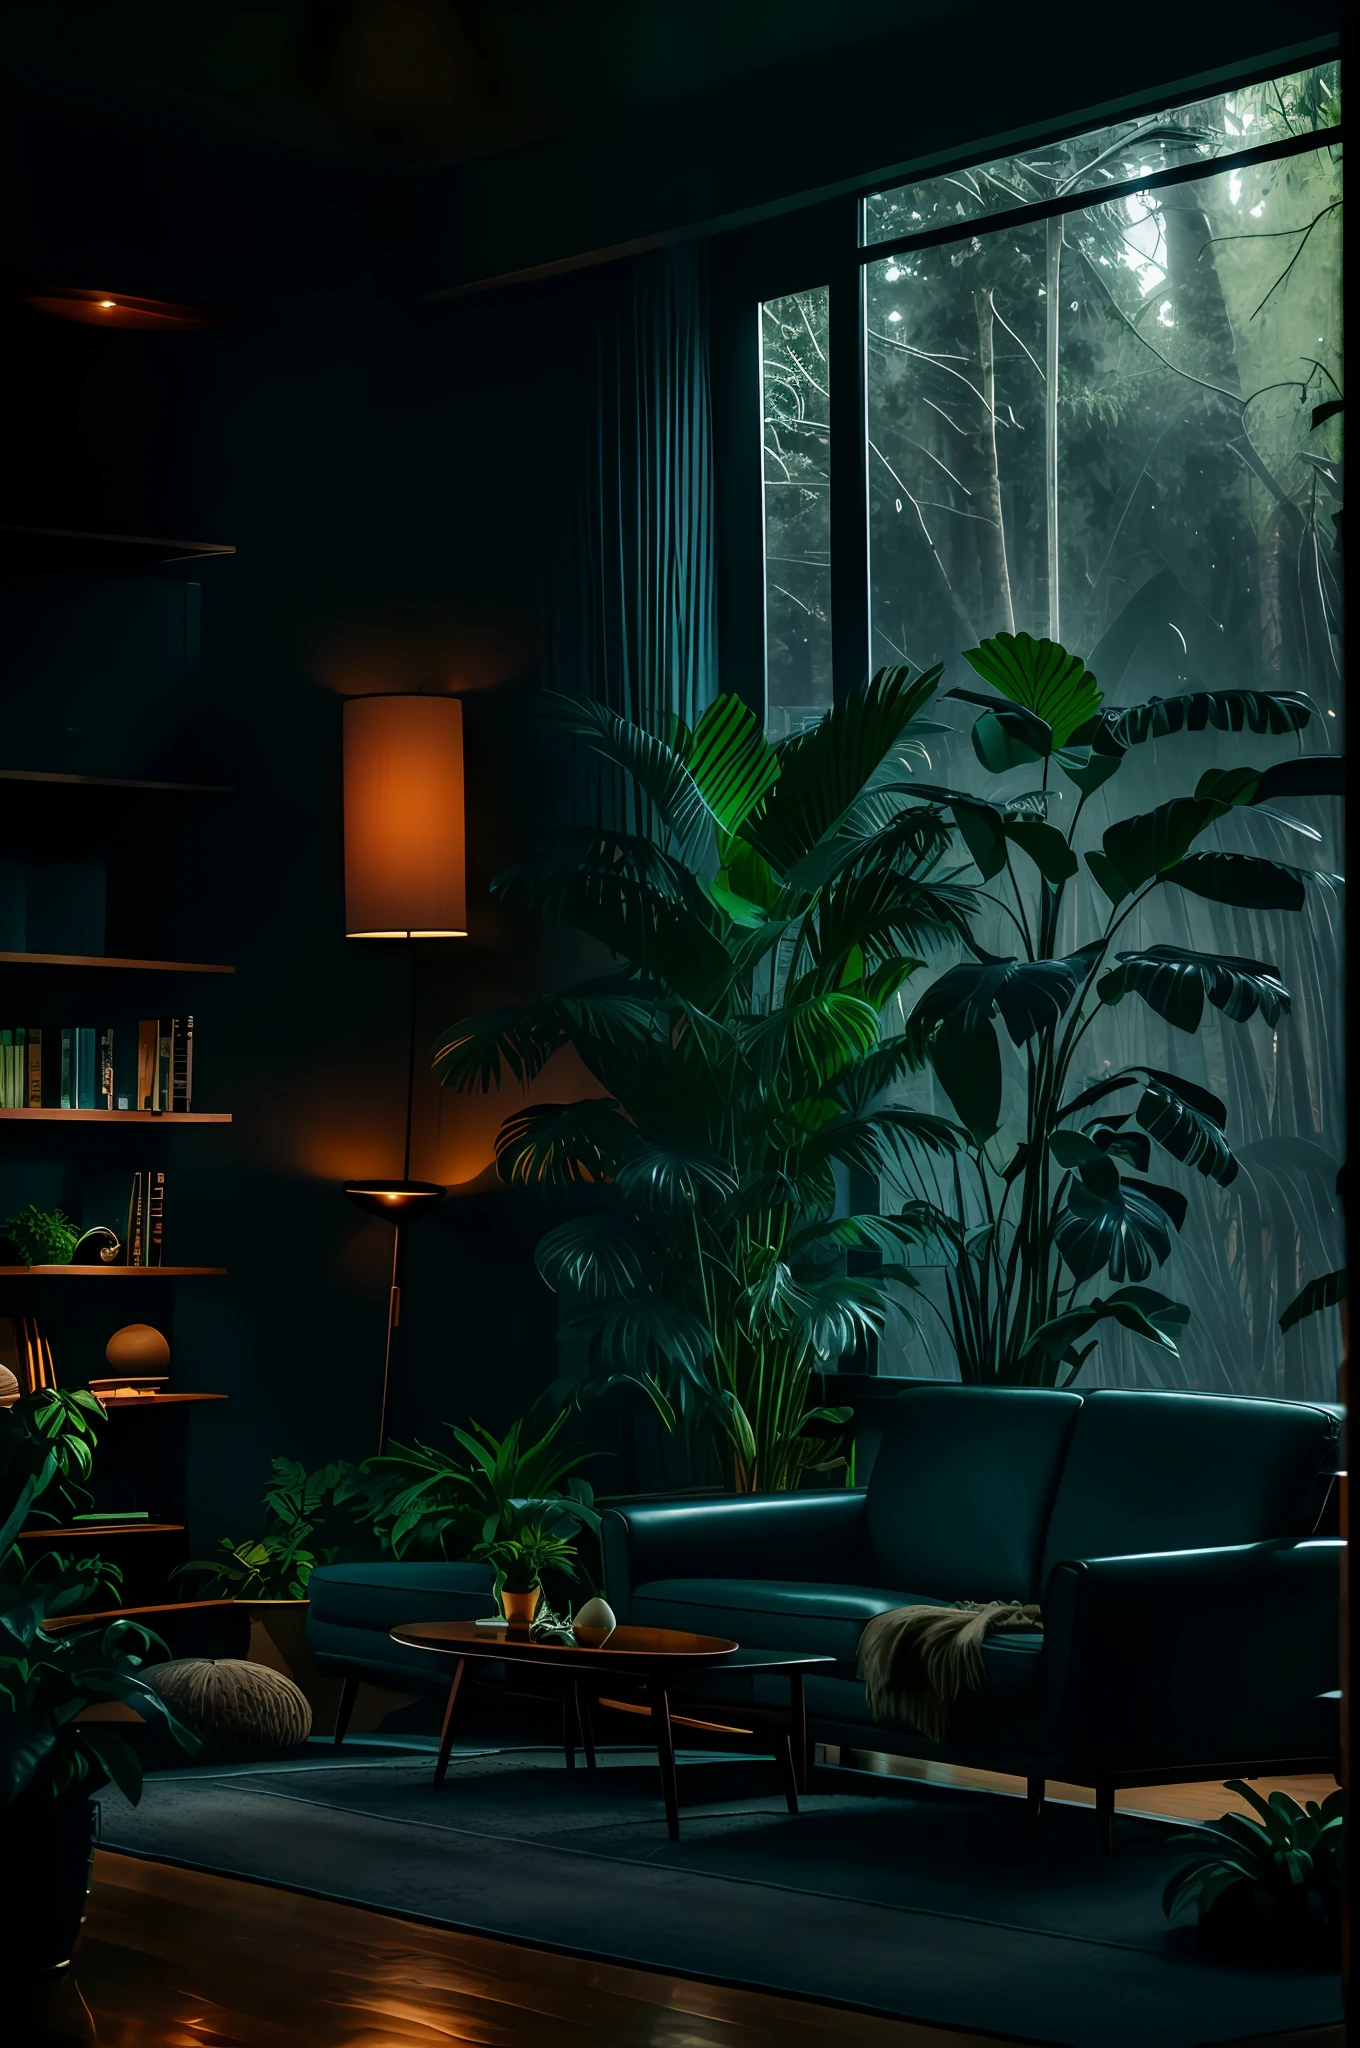 midcentury modern living room dimly lit with dark 下雨的 evening outside, (foggy 下雨的 evening:1.2), 西北太平洋, (昏暗的灯光:1.4), (穆迪照明:1.2), 植物, large 植物, 下雨的, 怪物, many 植物, (窗戶起霧:1.2), 傑作, 最好的品質, 黃昏時刻, (夜間:1.4), 下雨的 evening, 日落後,